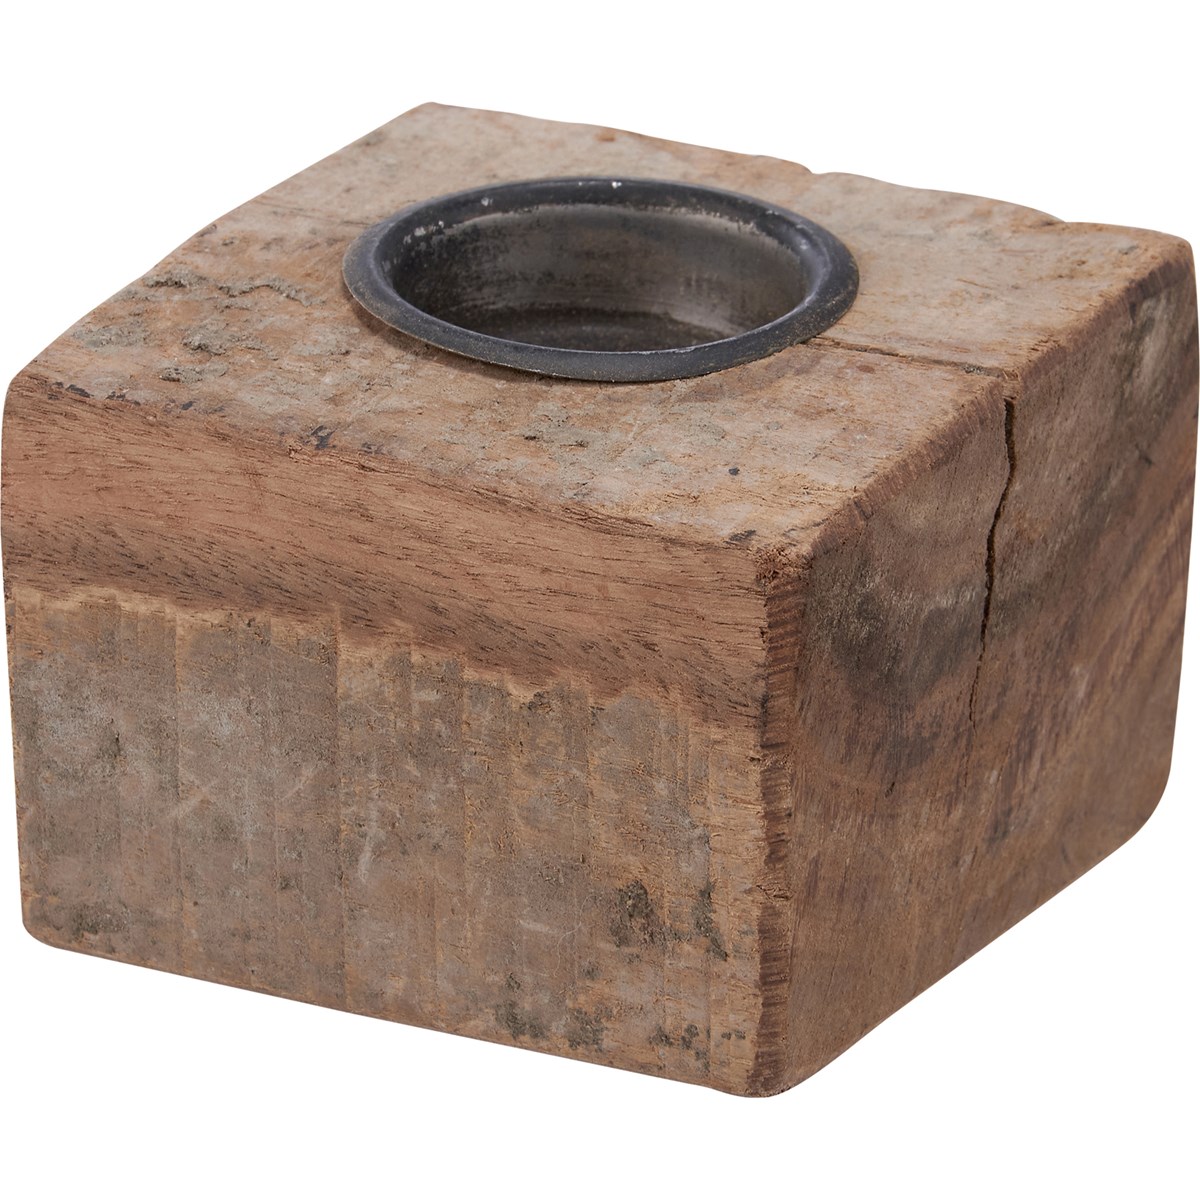 Candle Holder - Wood Block - 4" x 2.50" x 2" - Wood, Metal